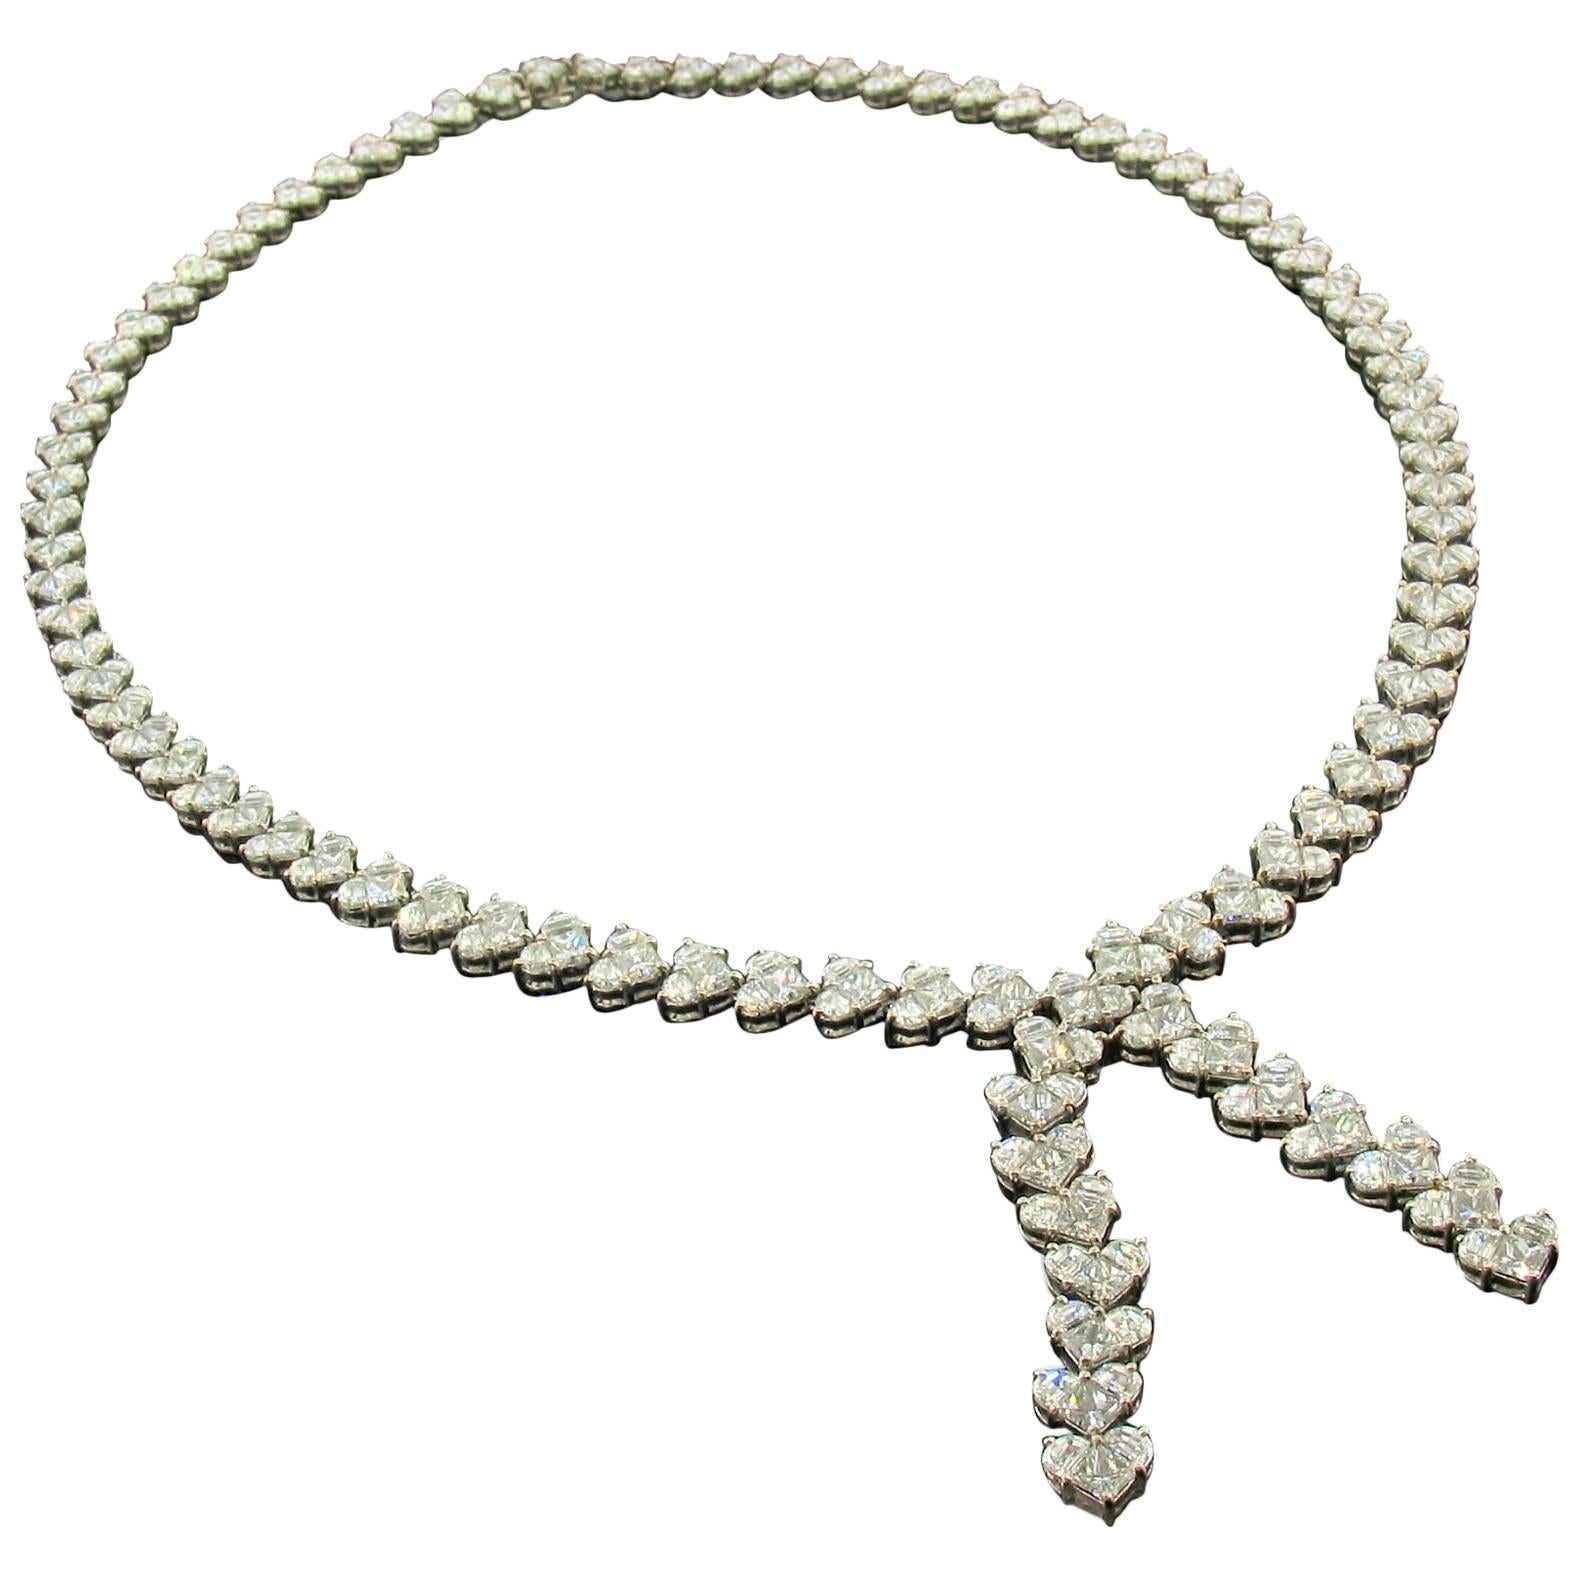 27.88 Carat Lariet-Style Diamond Necklace